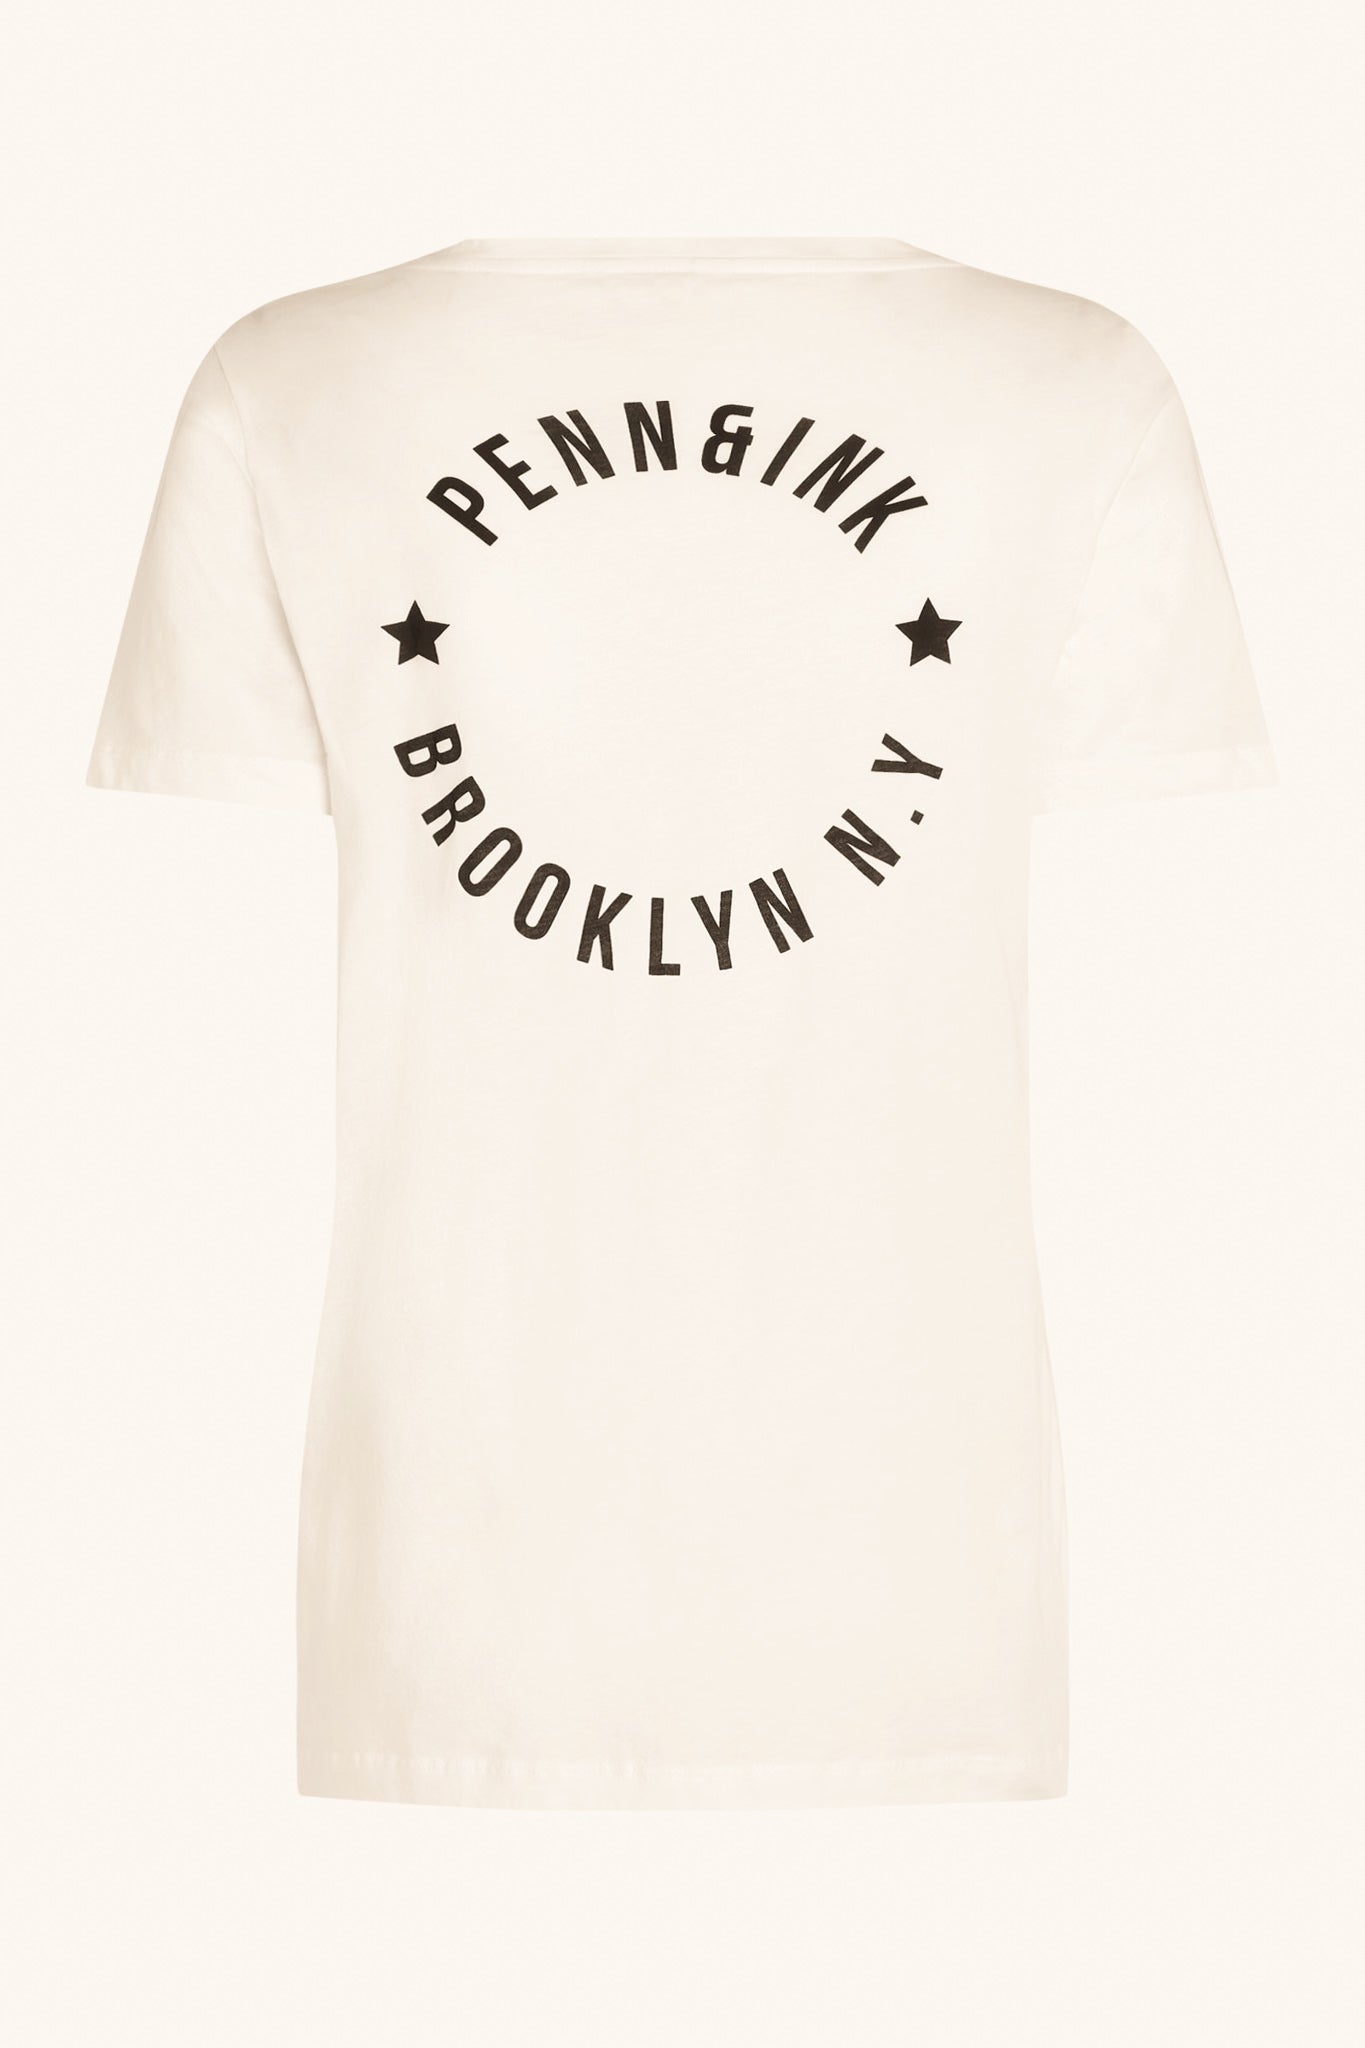 Penn&Ink N.Y - Shirt Organic Cotton S24F1429 - Ecru/Navy